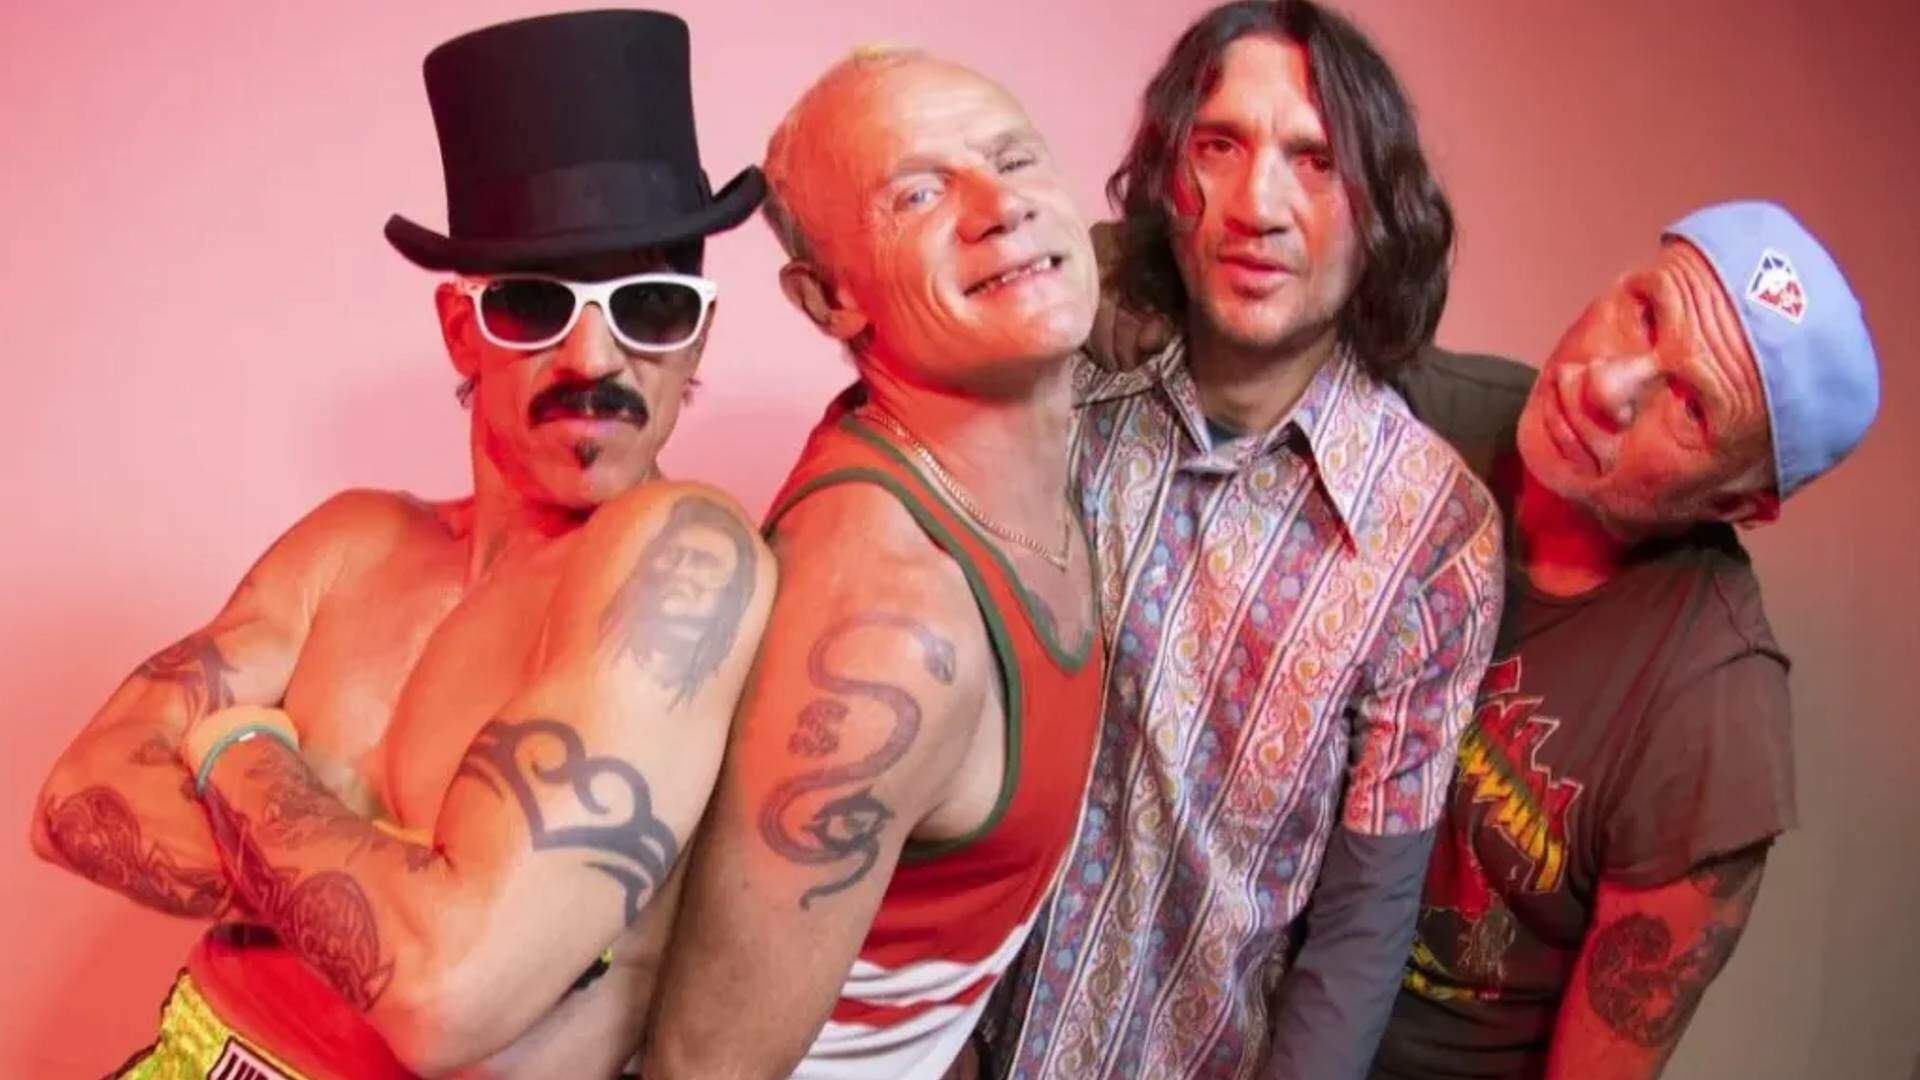 Red Hot Chili Peppers confirma turnê “Unlimited Love” pelo Brasil em 2023; confira datas dos shows - Metropolitana FM